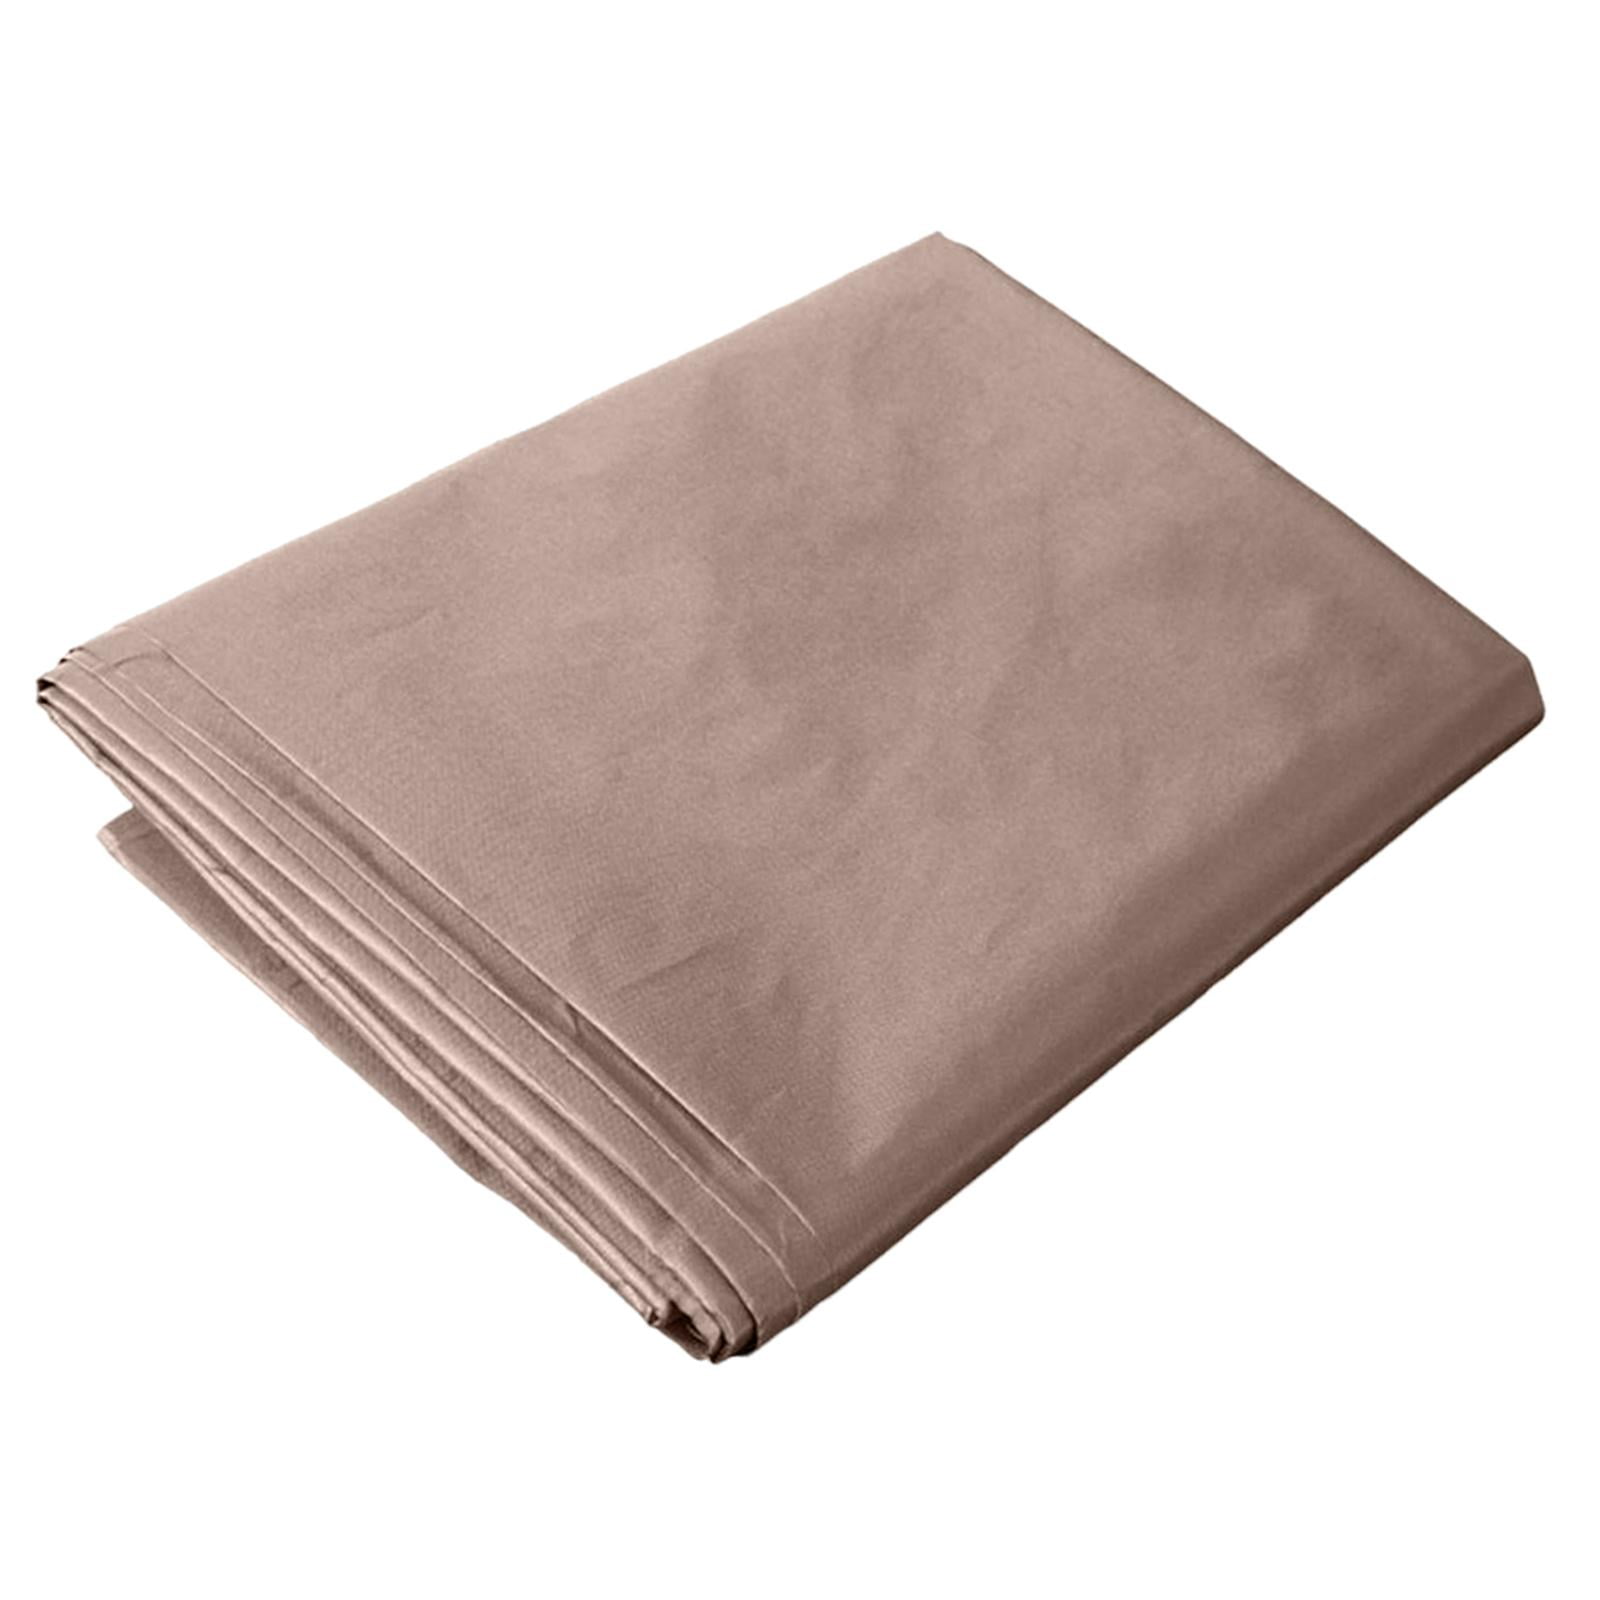  Wearable Faraday Blanket -70x 54, Ultra-Soft Faraday